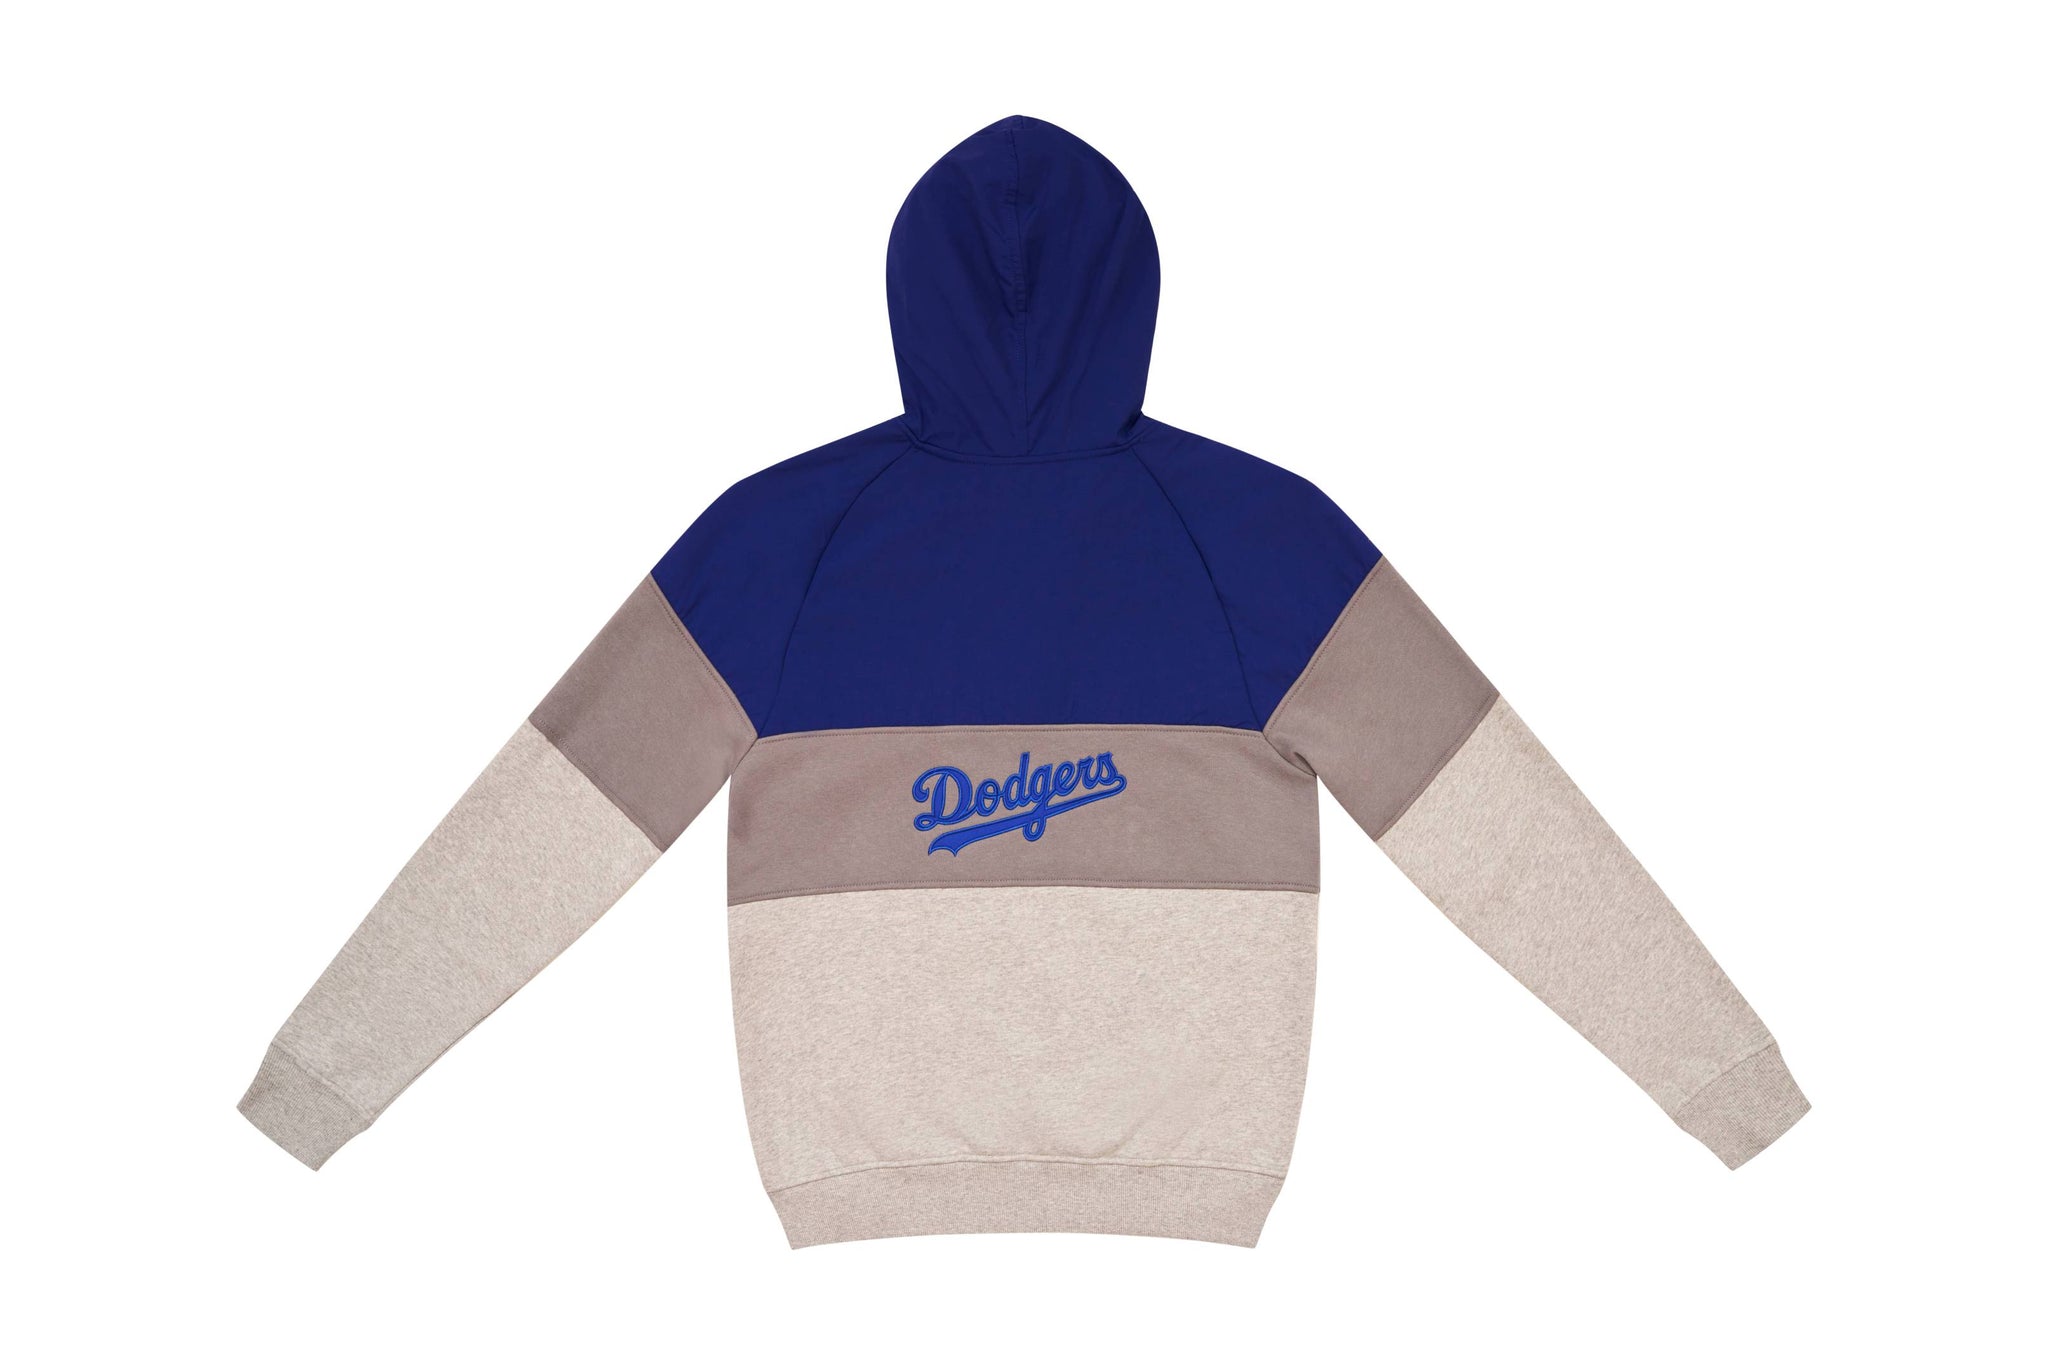 Los Angeles Dodgers Youth LA Logo Pullover Hoodie Sweatshirt Blue